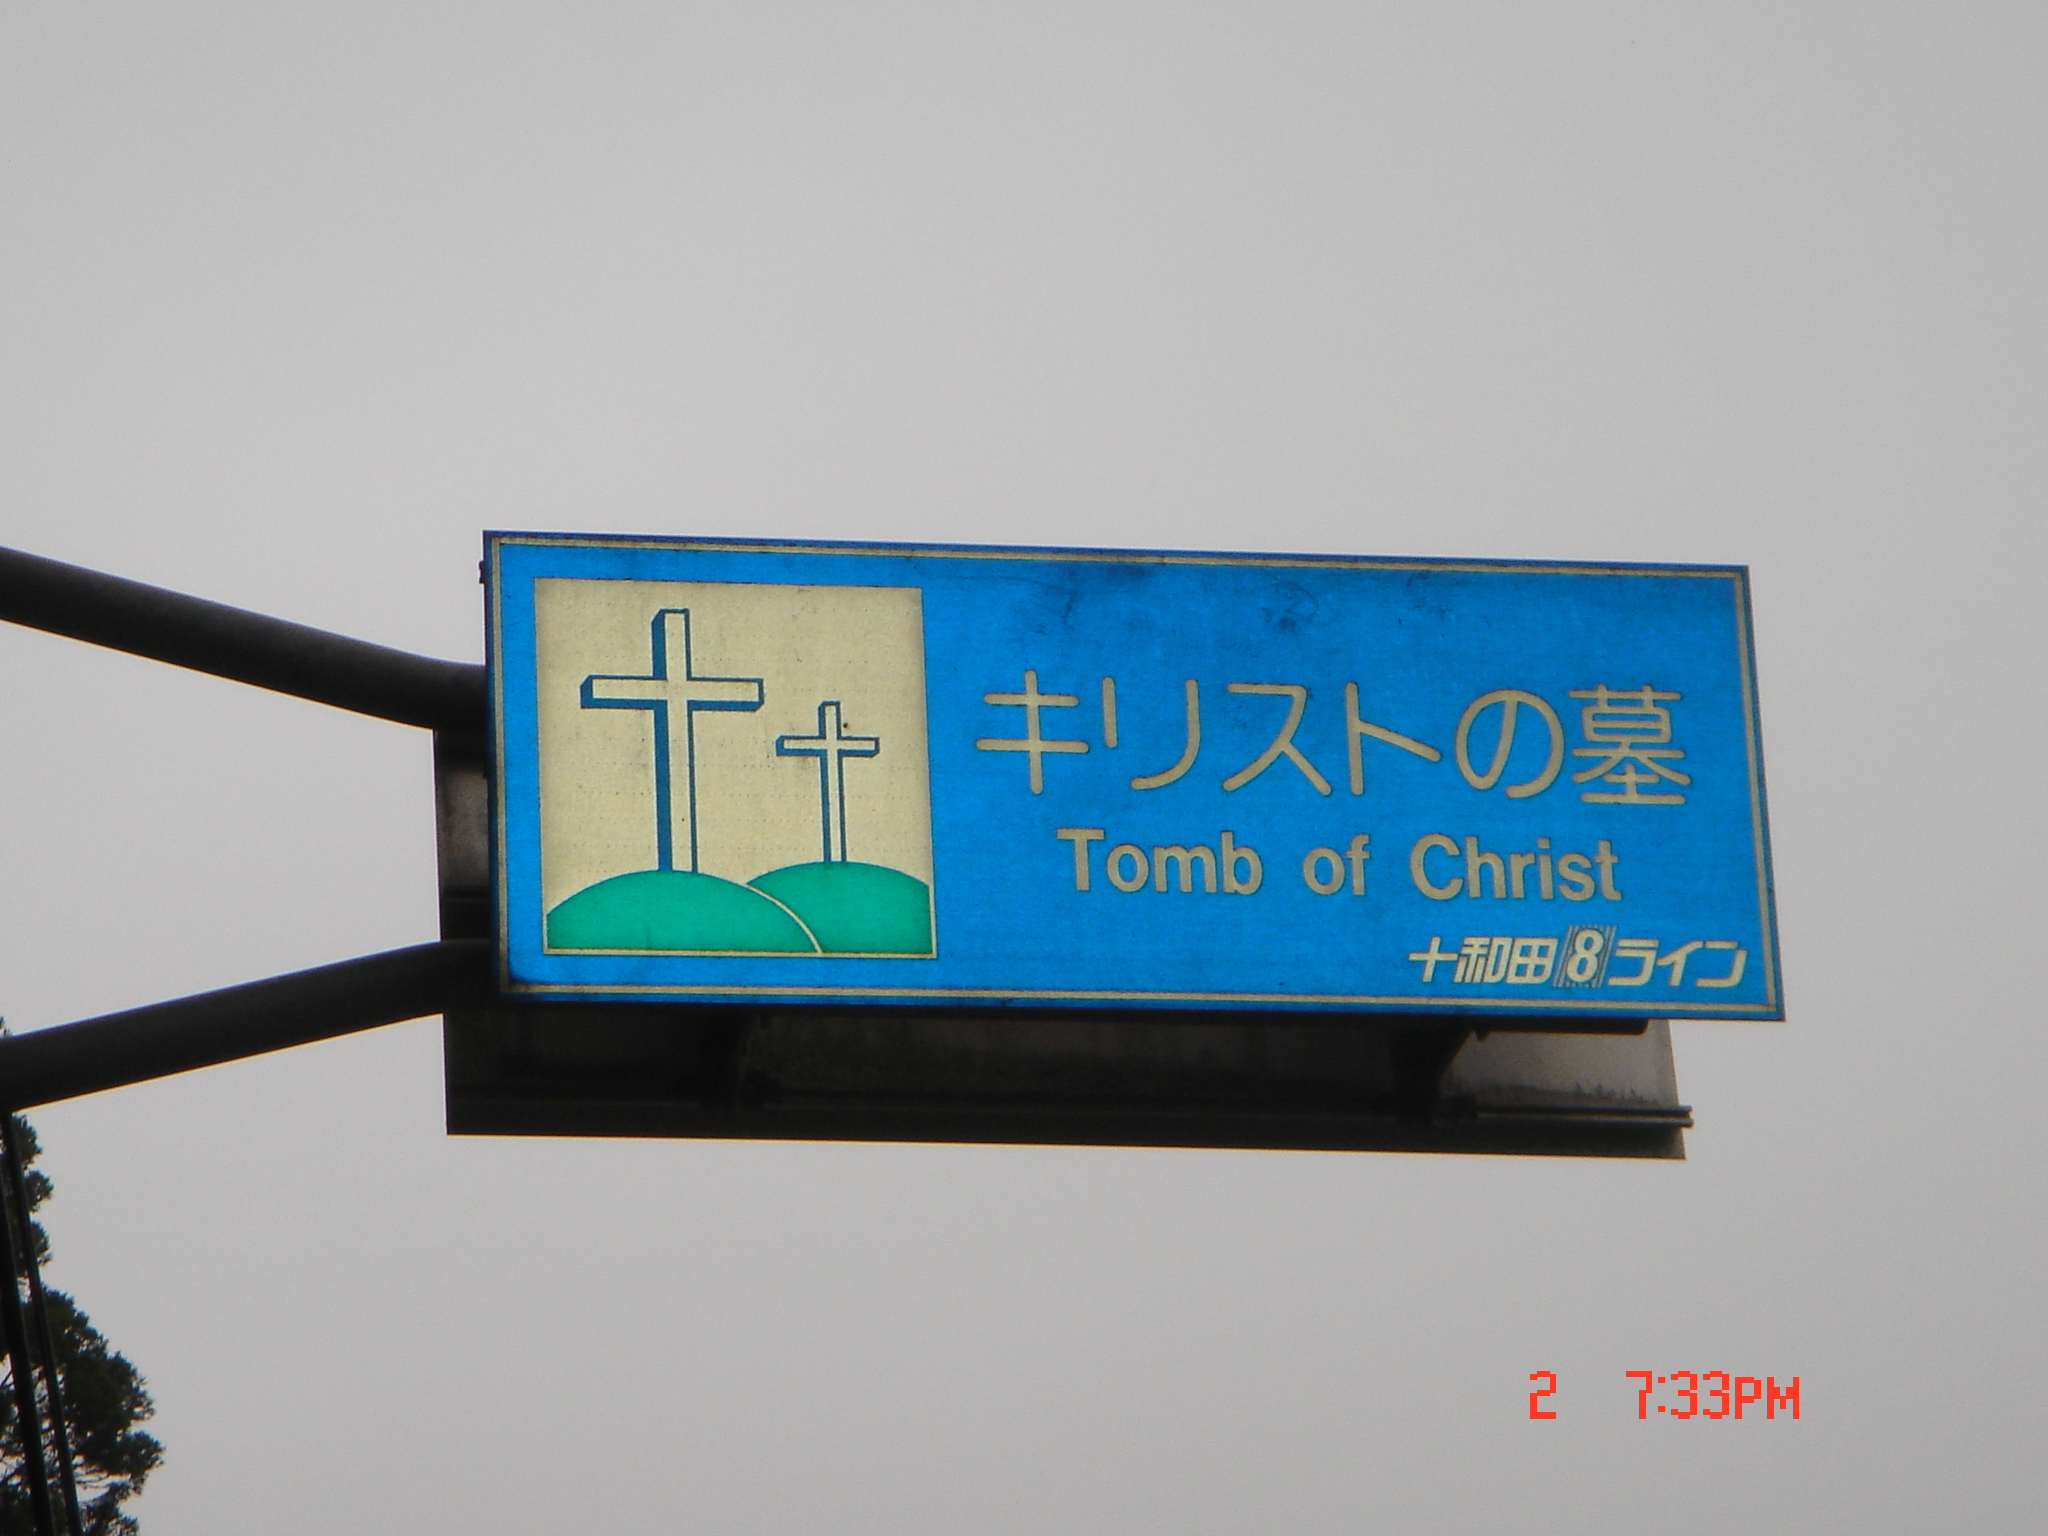 Road sign for Shingo Mura